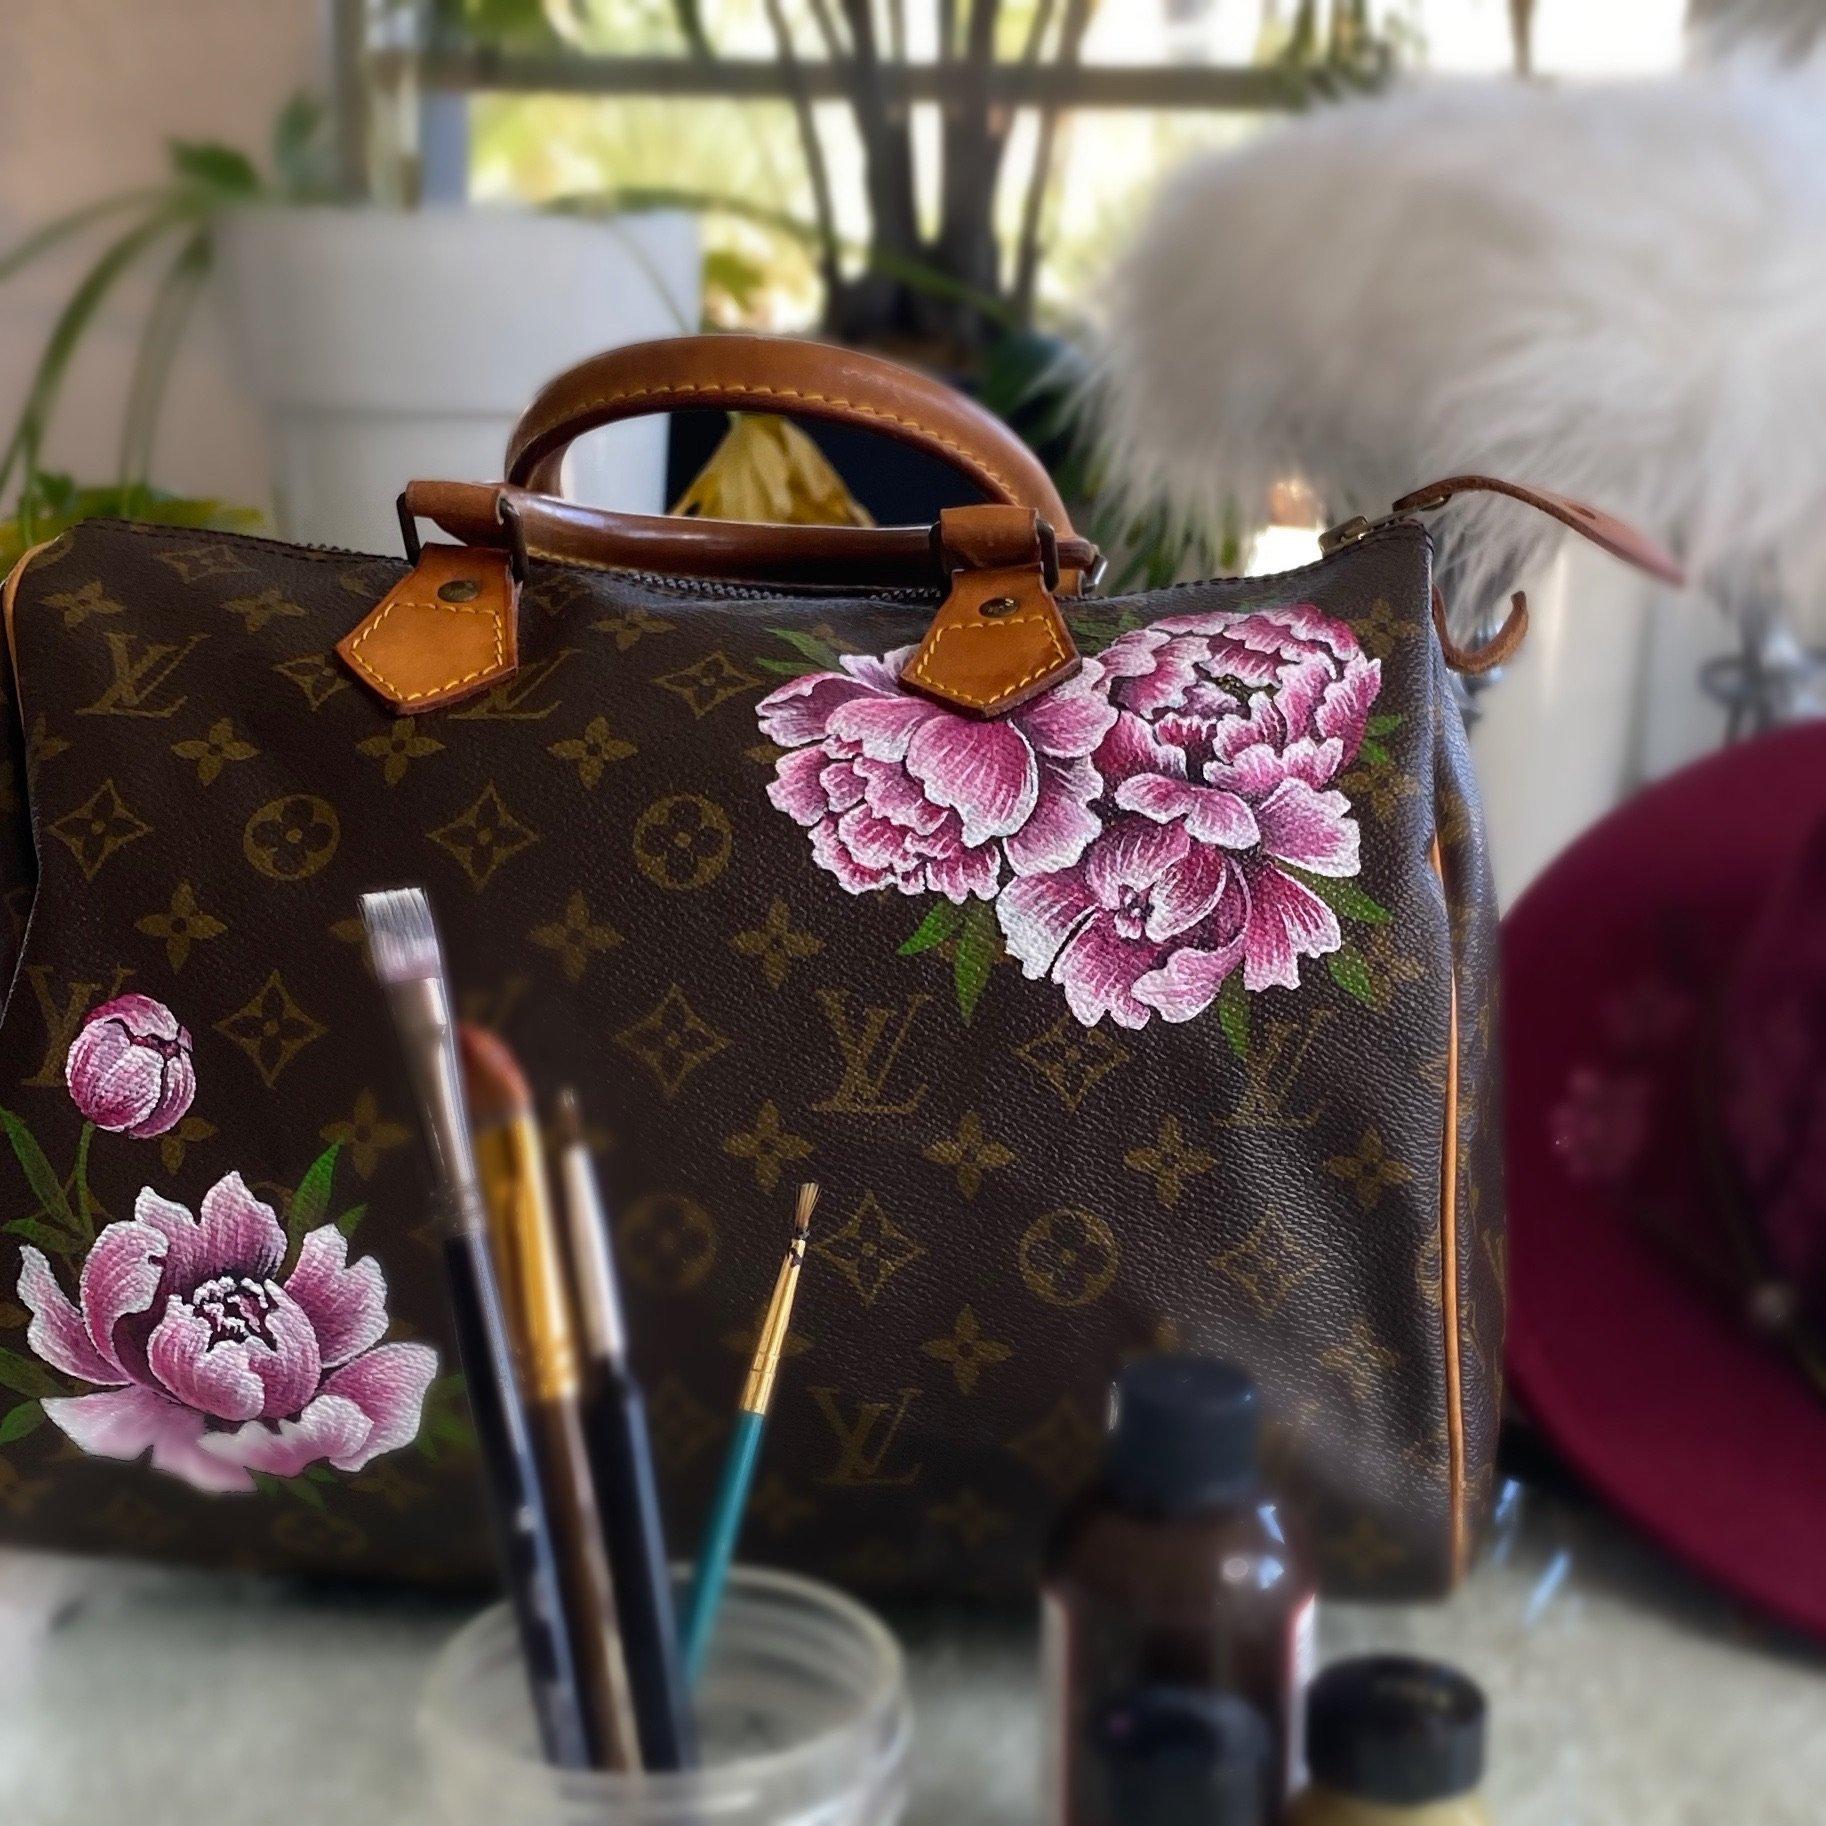 Louis Vuitton Speedy 30 Women's Authentic Pre Owned Custom Painted Handbag Dual Top Handles Brown Pink Luxury Monogram Canvas